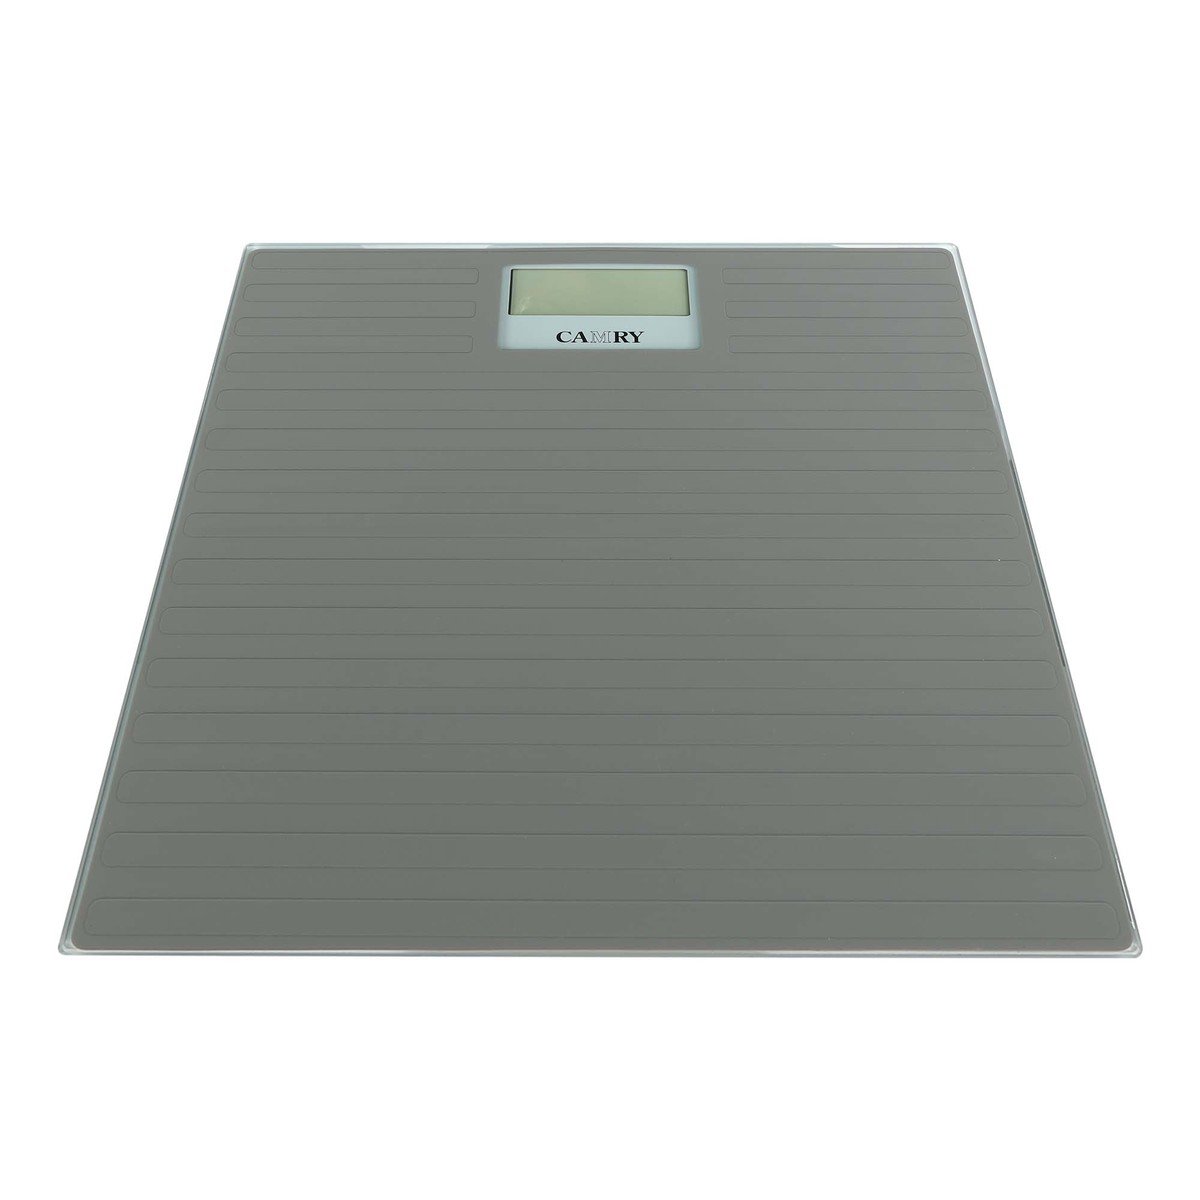 Camry Digital Bathroom Scale with Anti-slip Silicone EB9377 Assorted